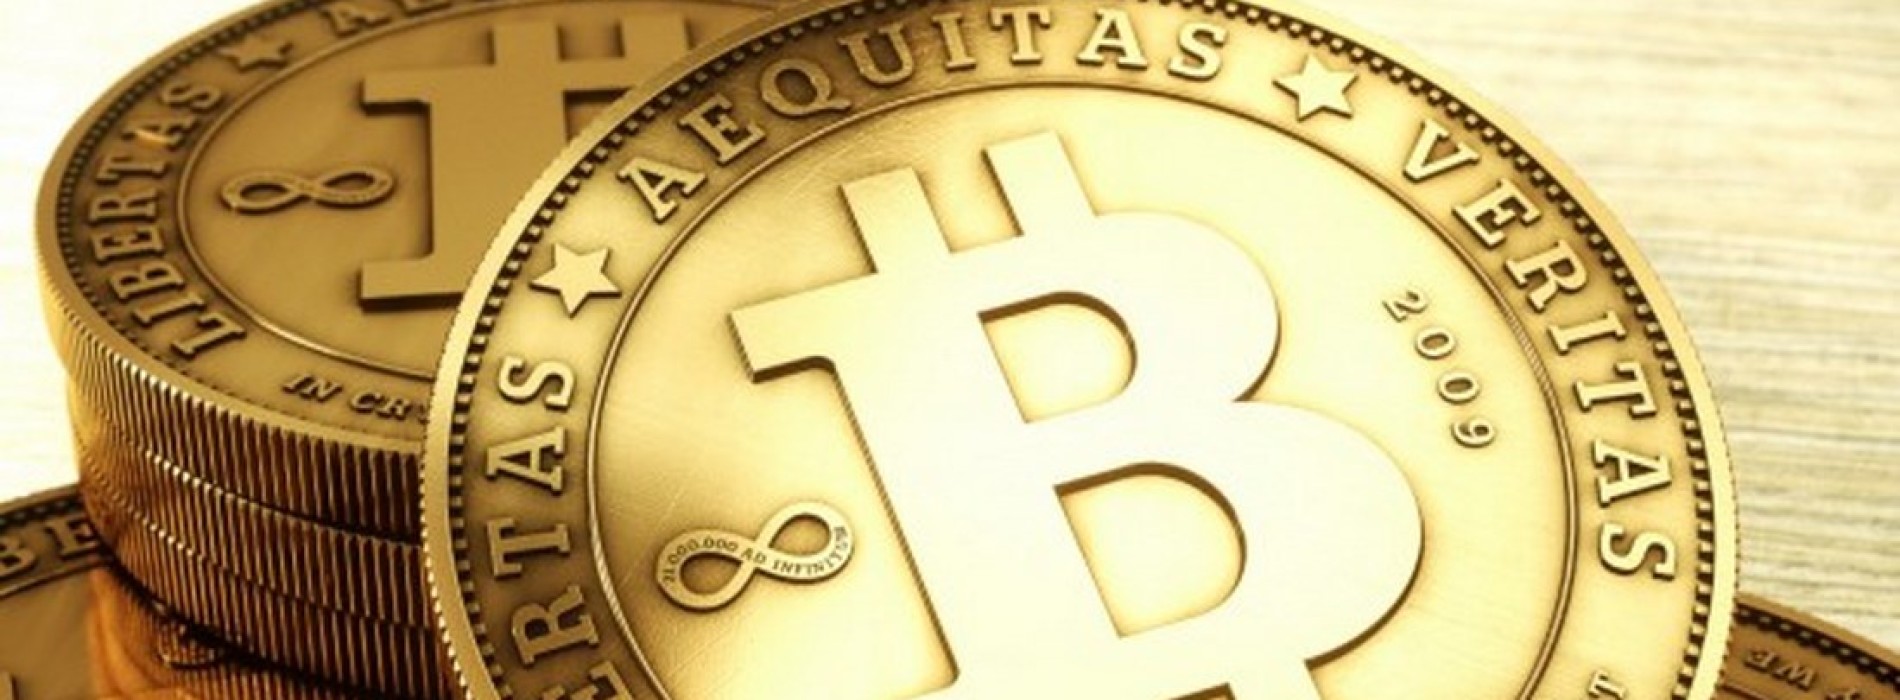 Bitcoin – globalna rewolucja finansowa